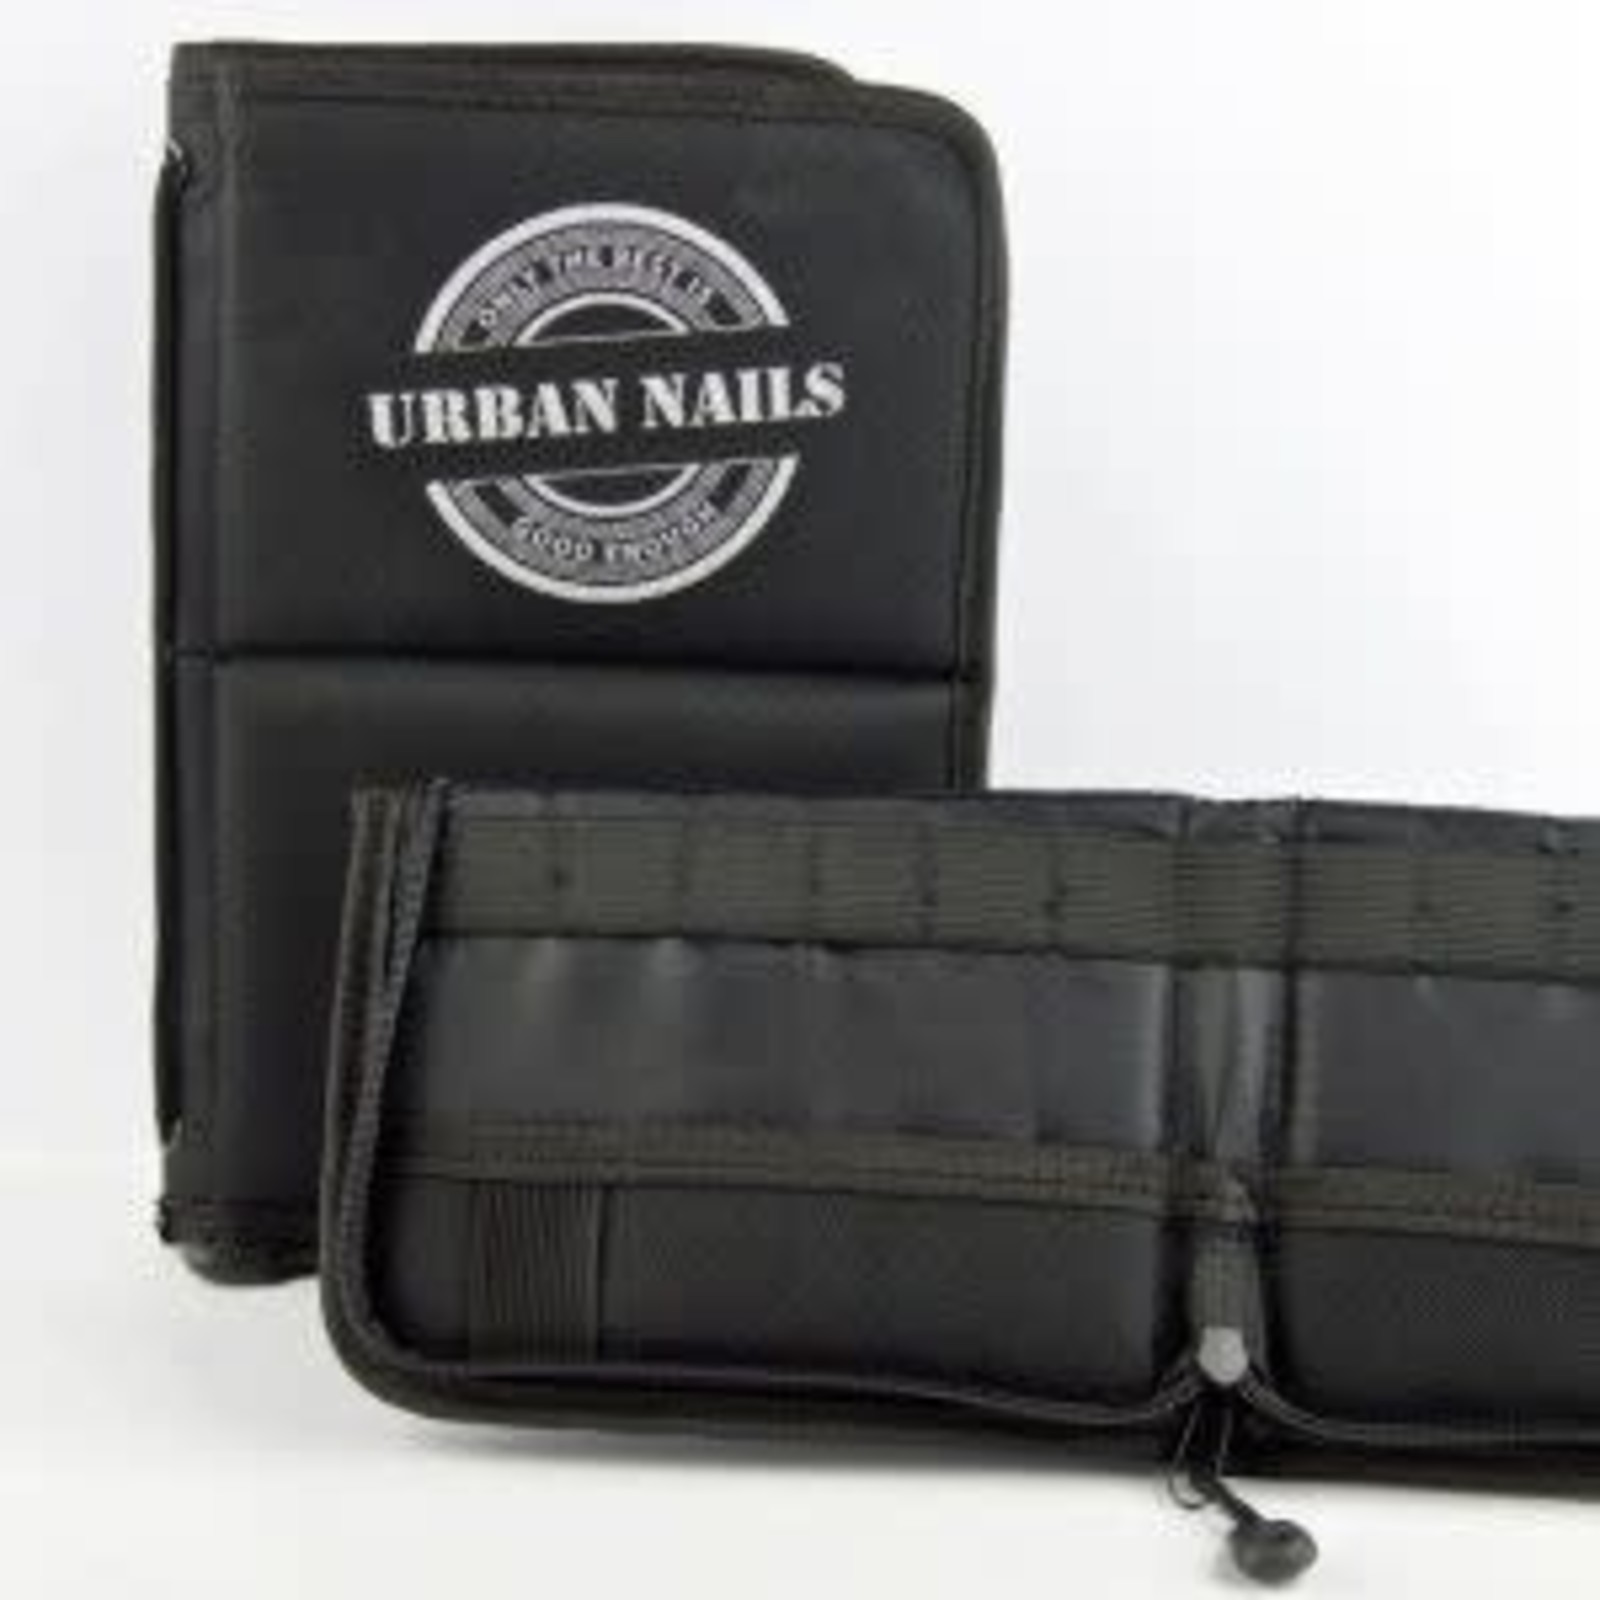 Urban nails Urban Nails penselen etui compact